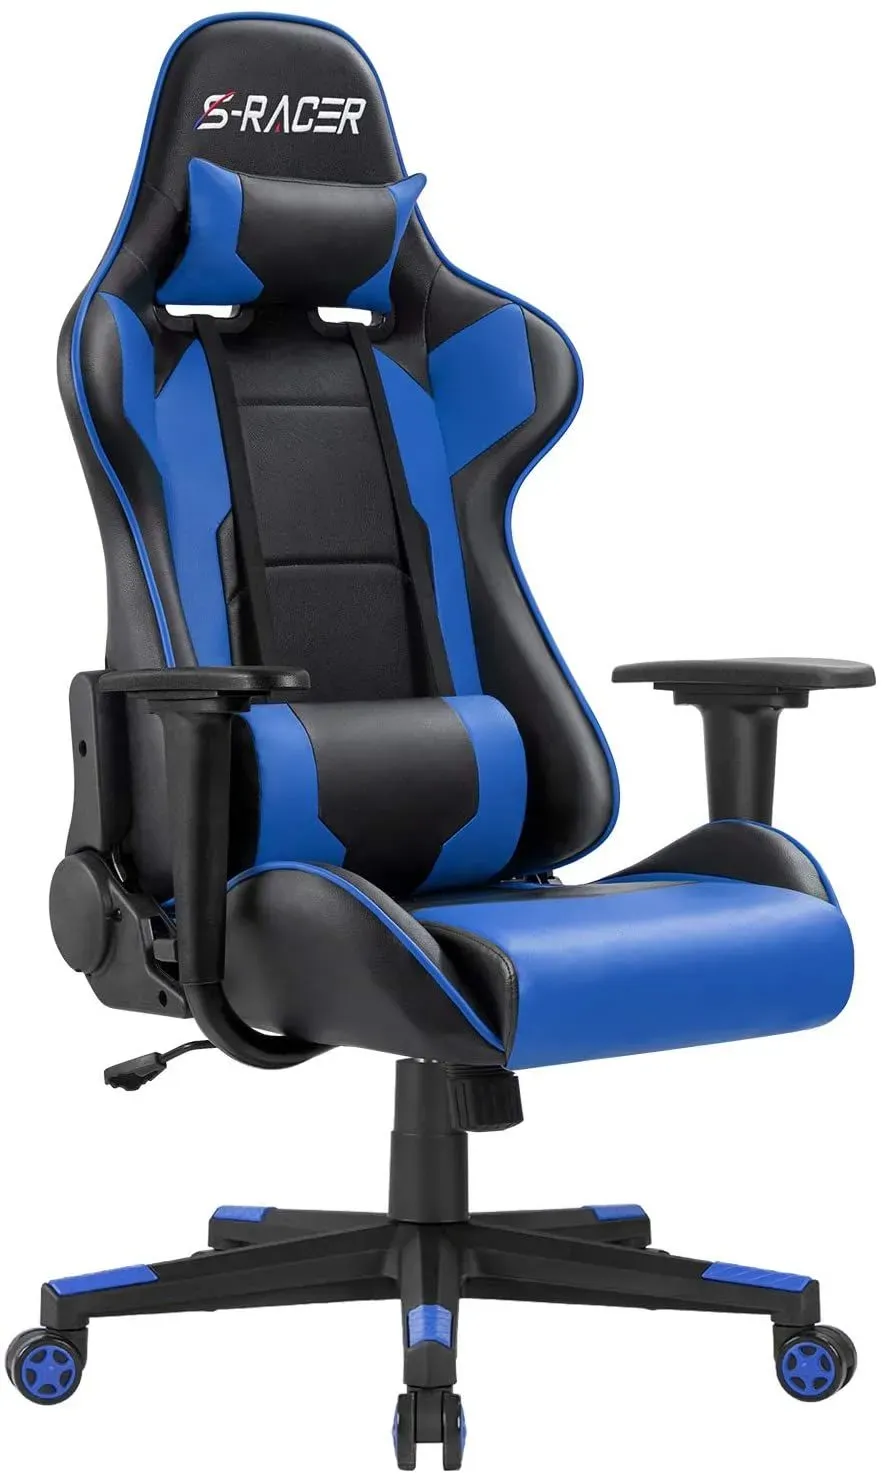 Homall S-racer Ergonomic Gaming Chair.